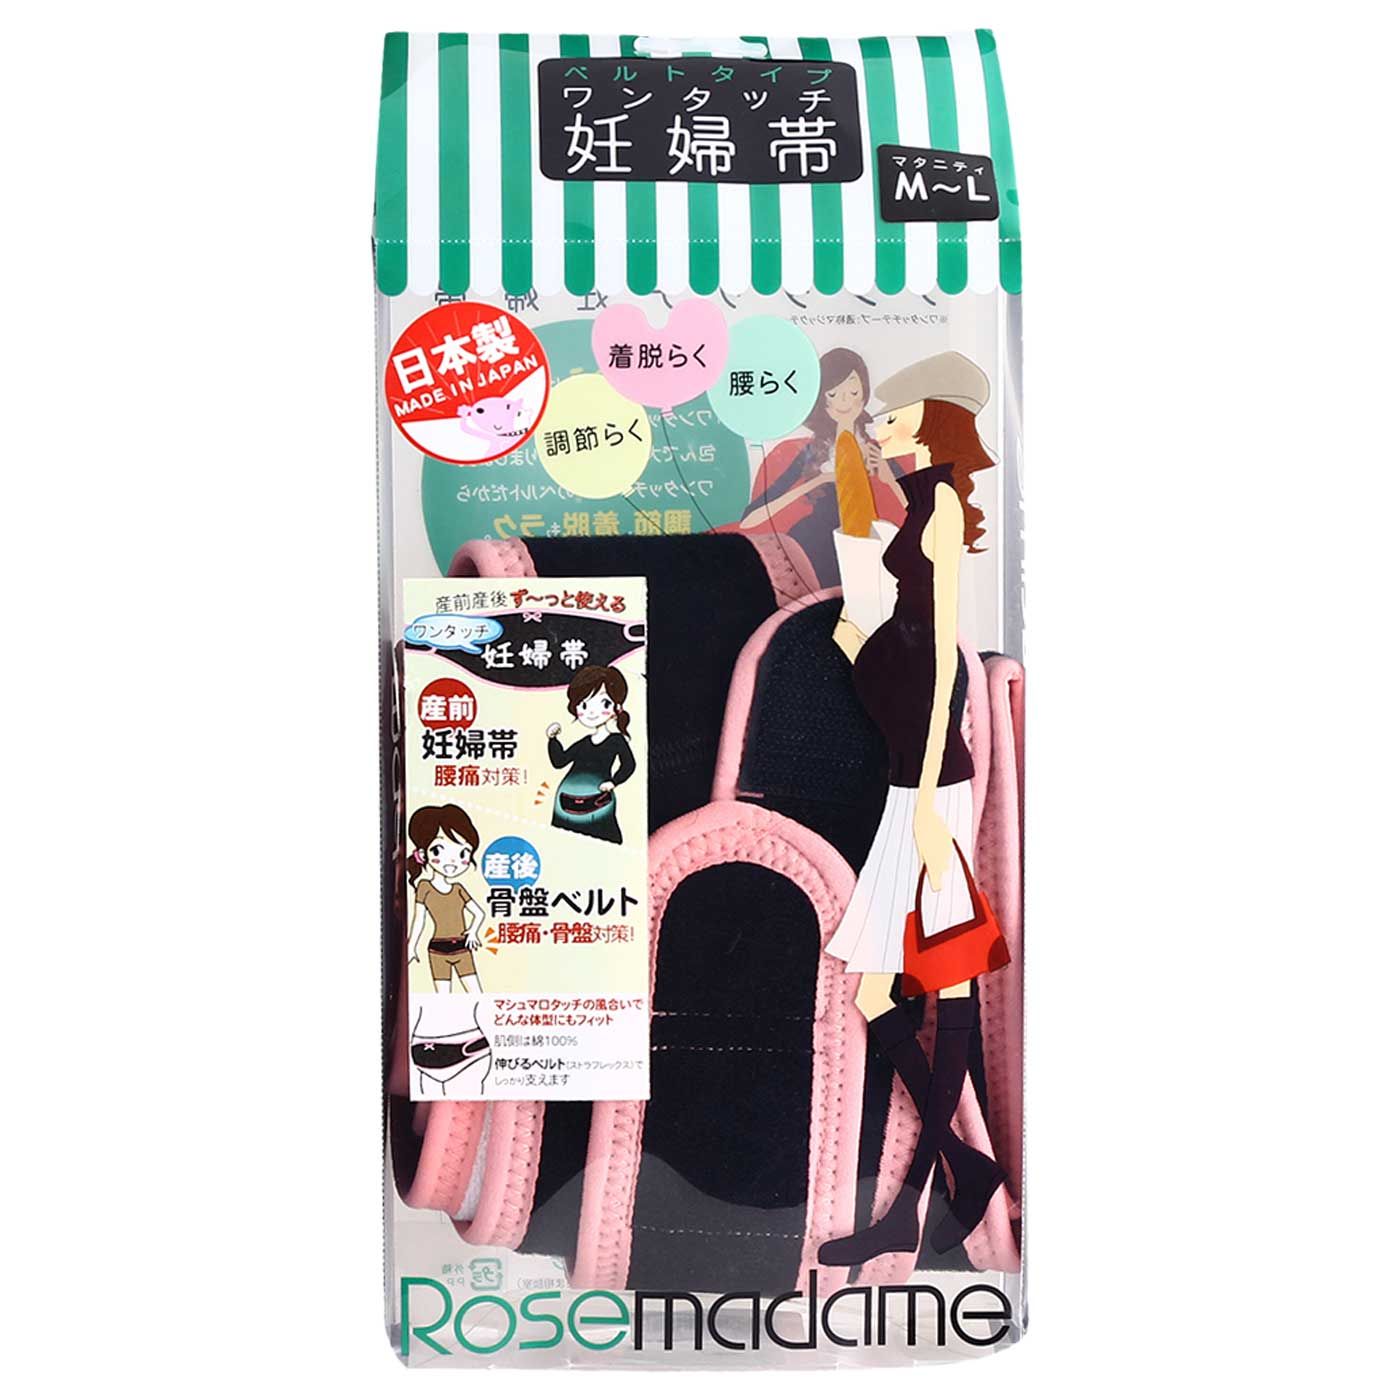 Rosemadame Easy-to-wear Abdominal Coverage Black-M-L - 3